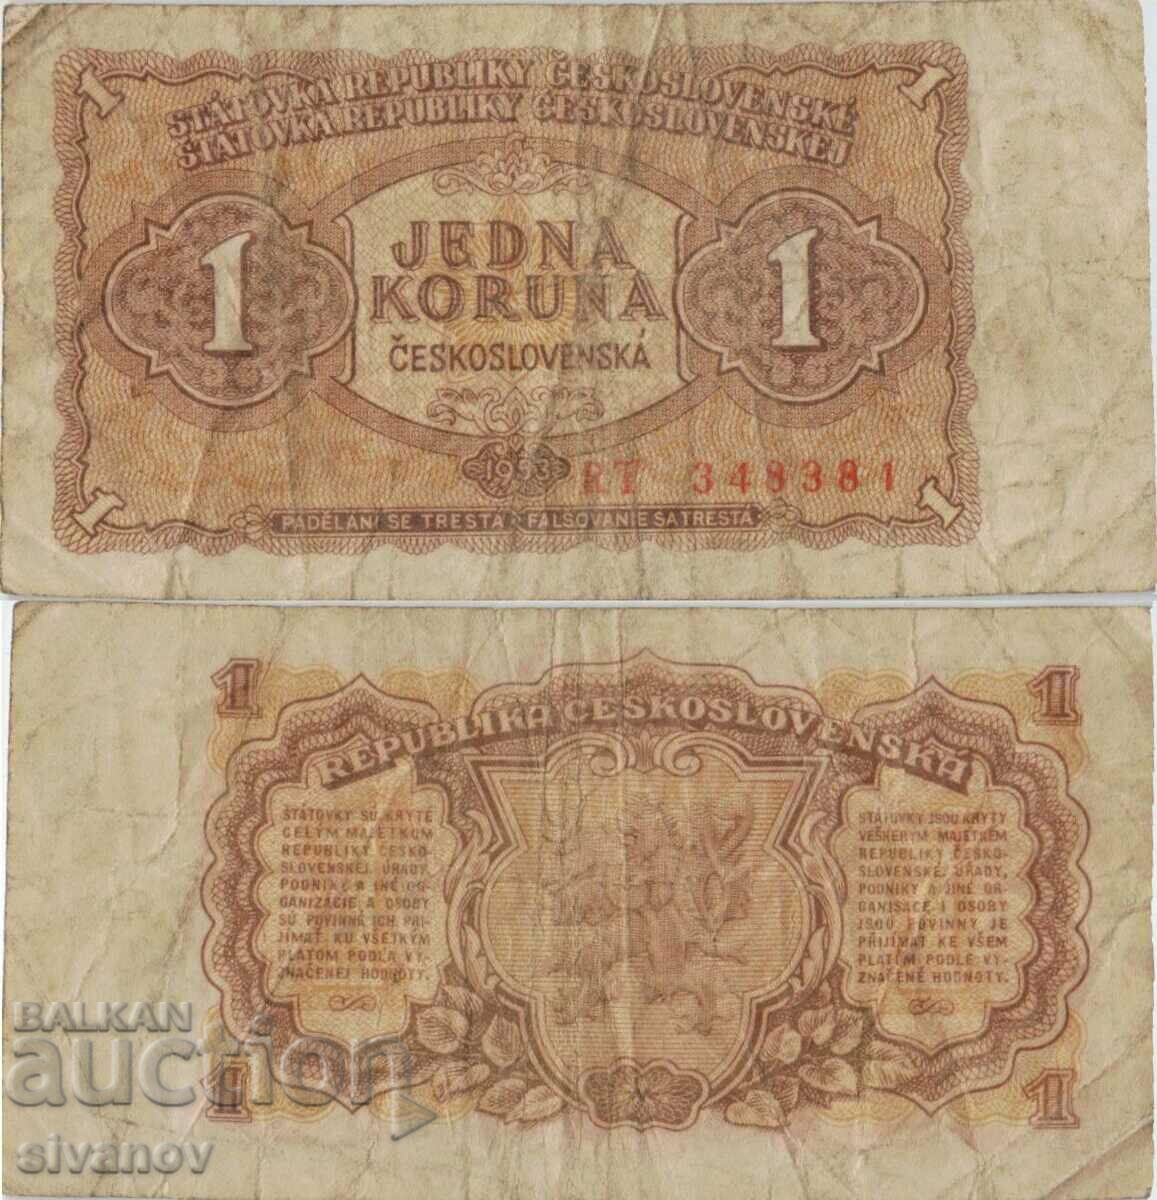 Czechoslovakia 1 Krone 1953 Banknote #5233